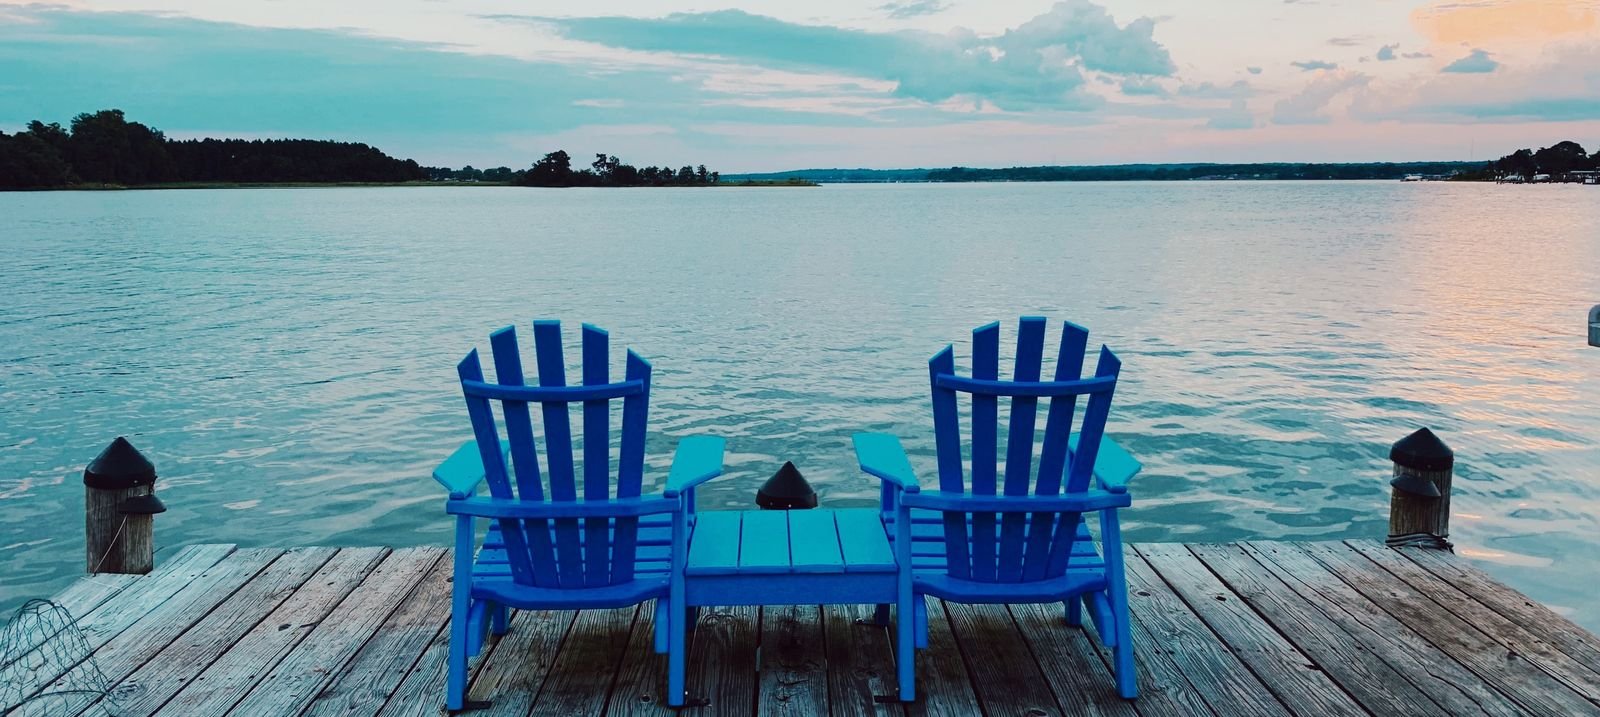 Adirondack Chairs on the dock in muskoka (1)